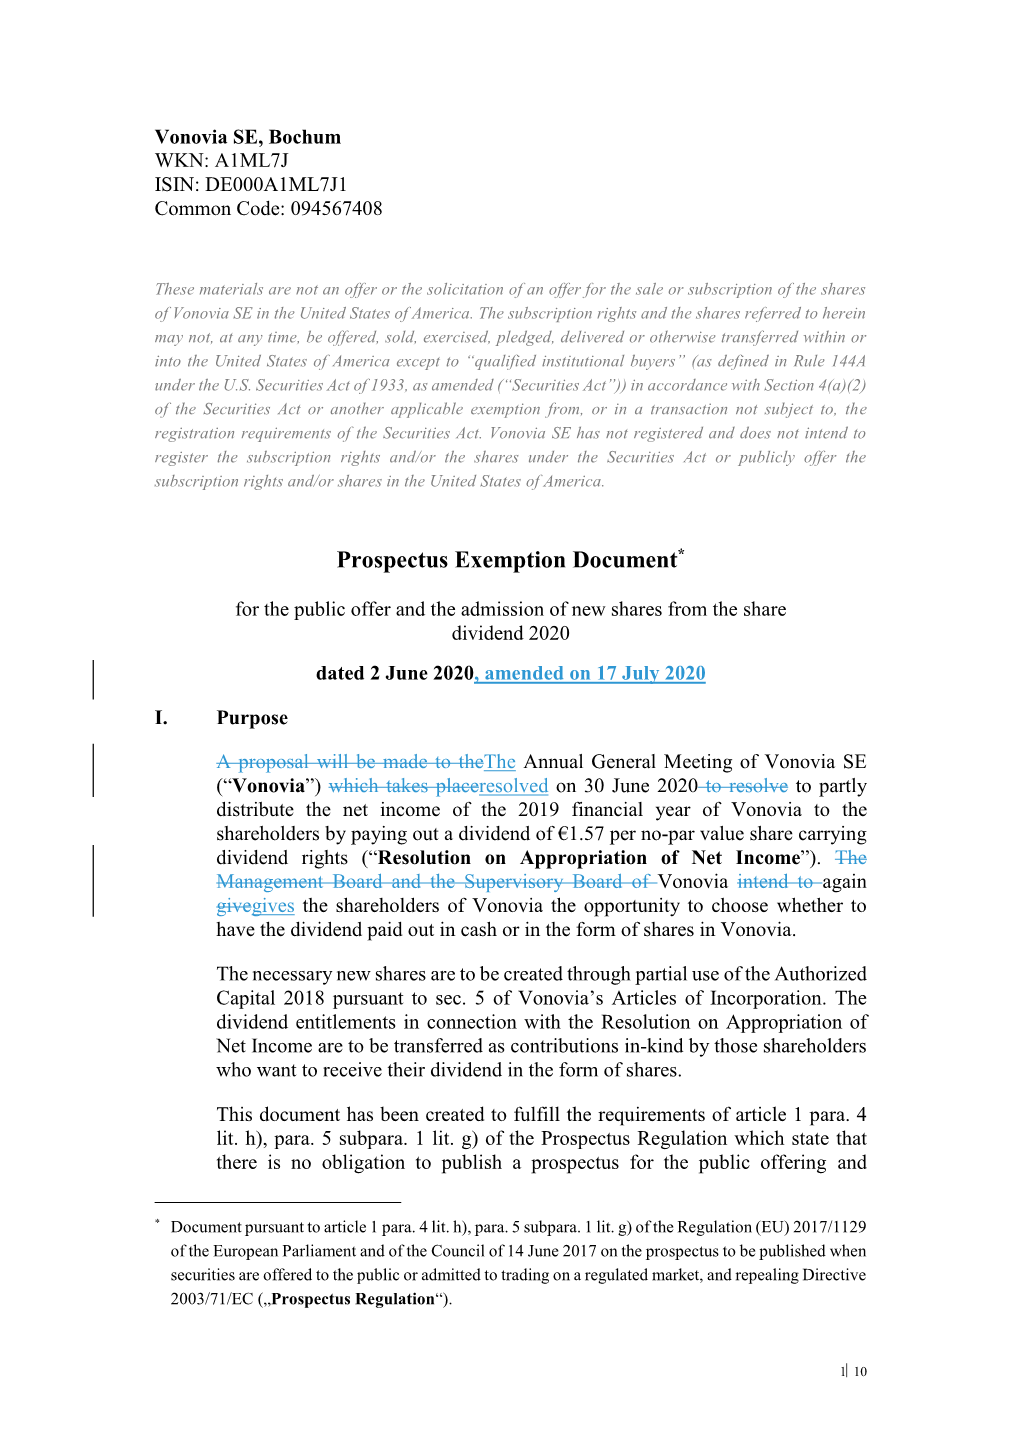 Prospectus Exemption Document*